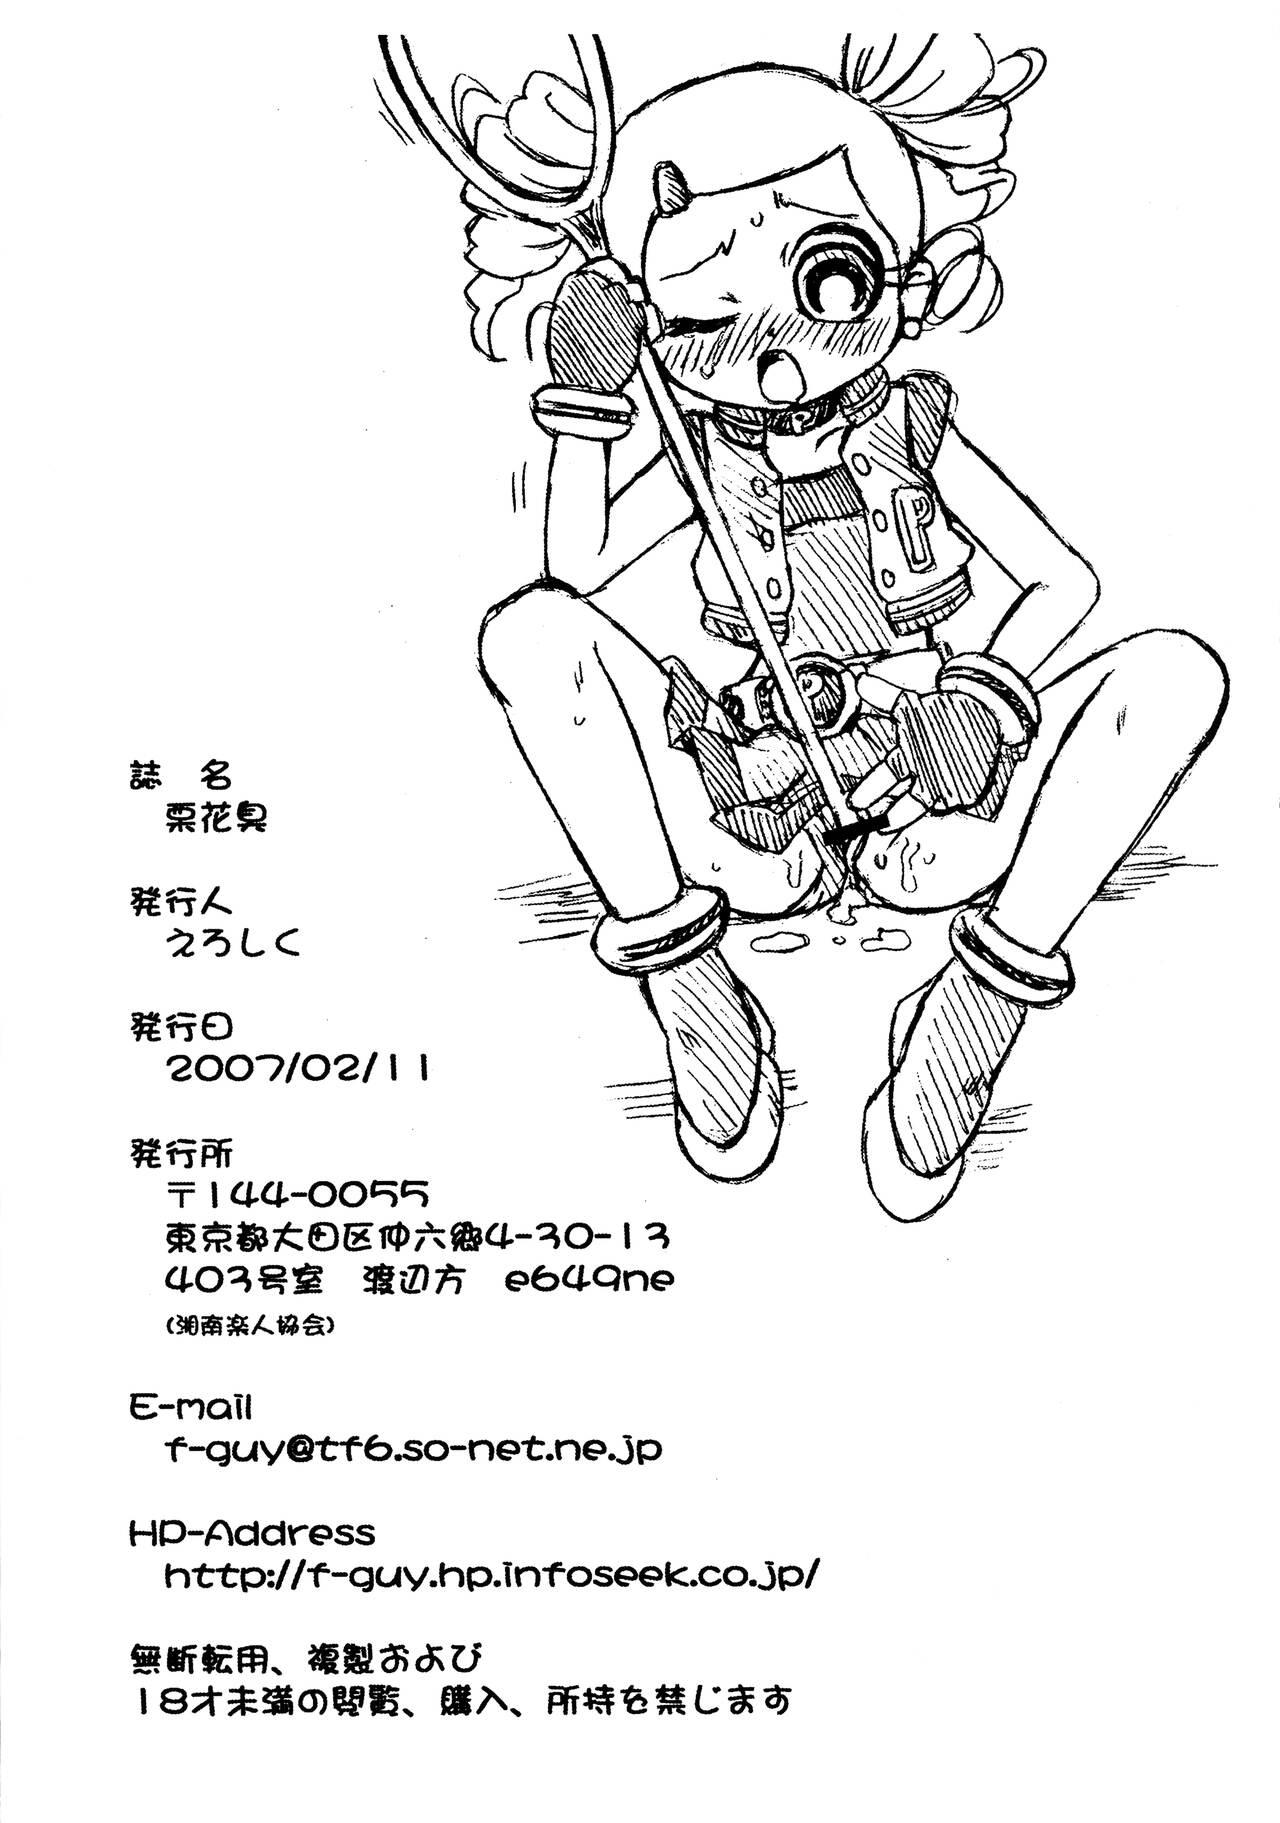 Novinha kuriko blossom smell - Powerpuff girls z | demashita powerpuff girls z Twinks - Page 12